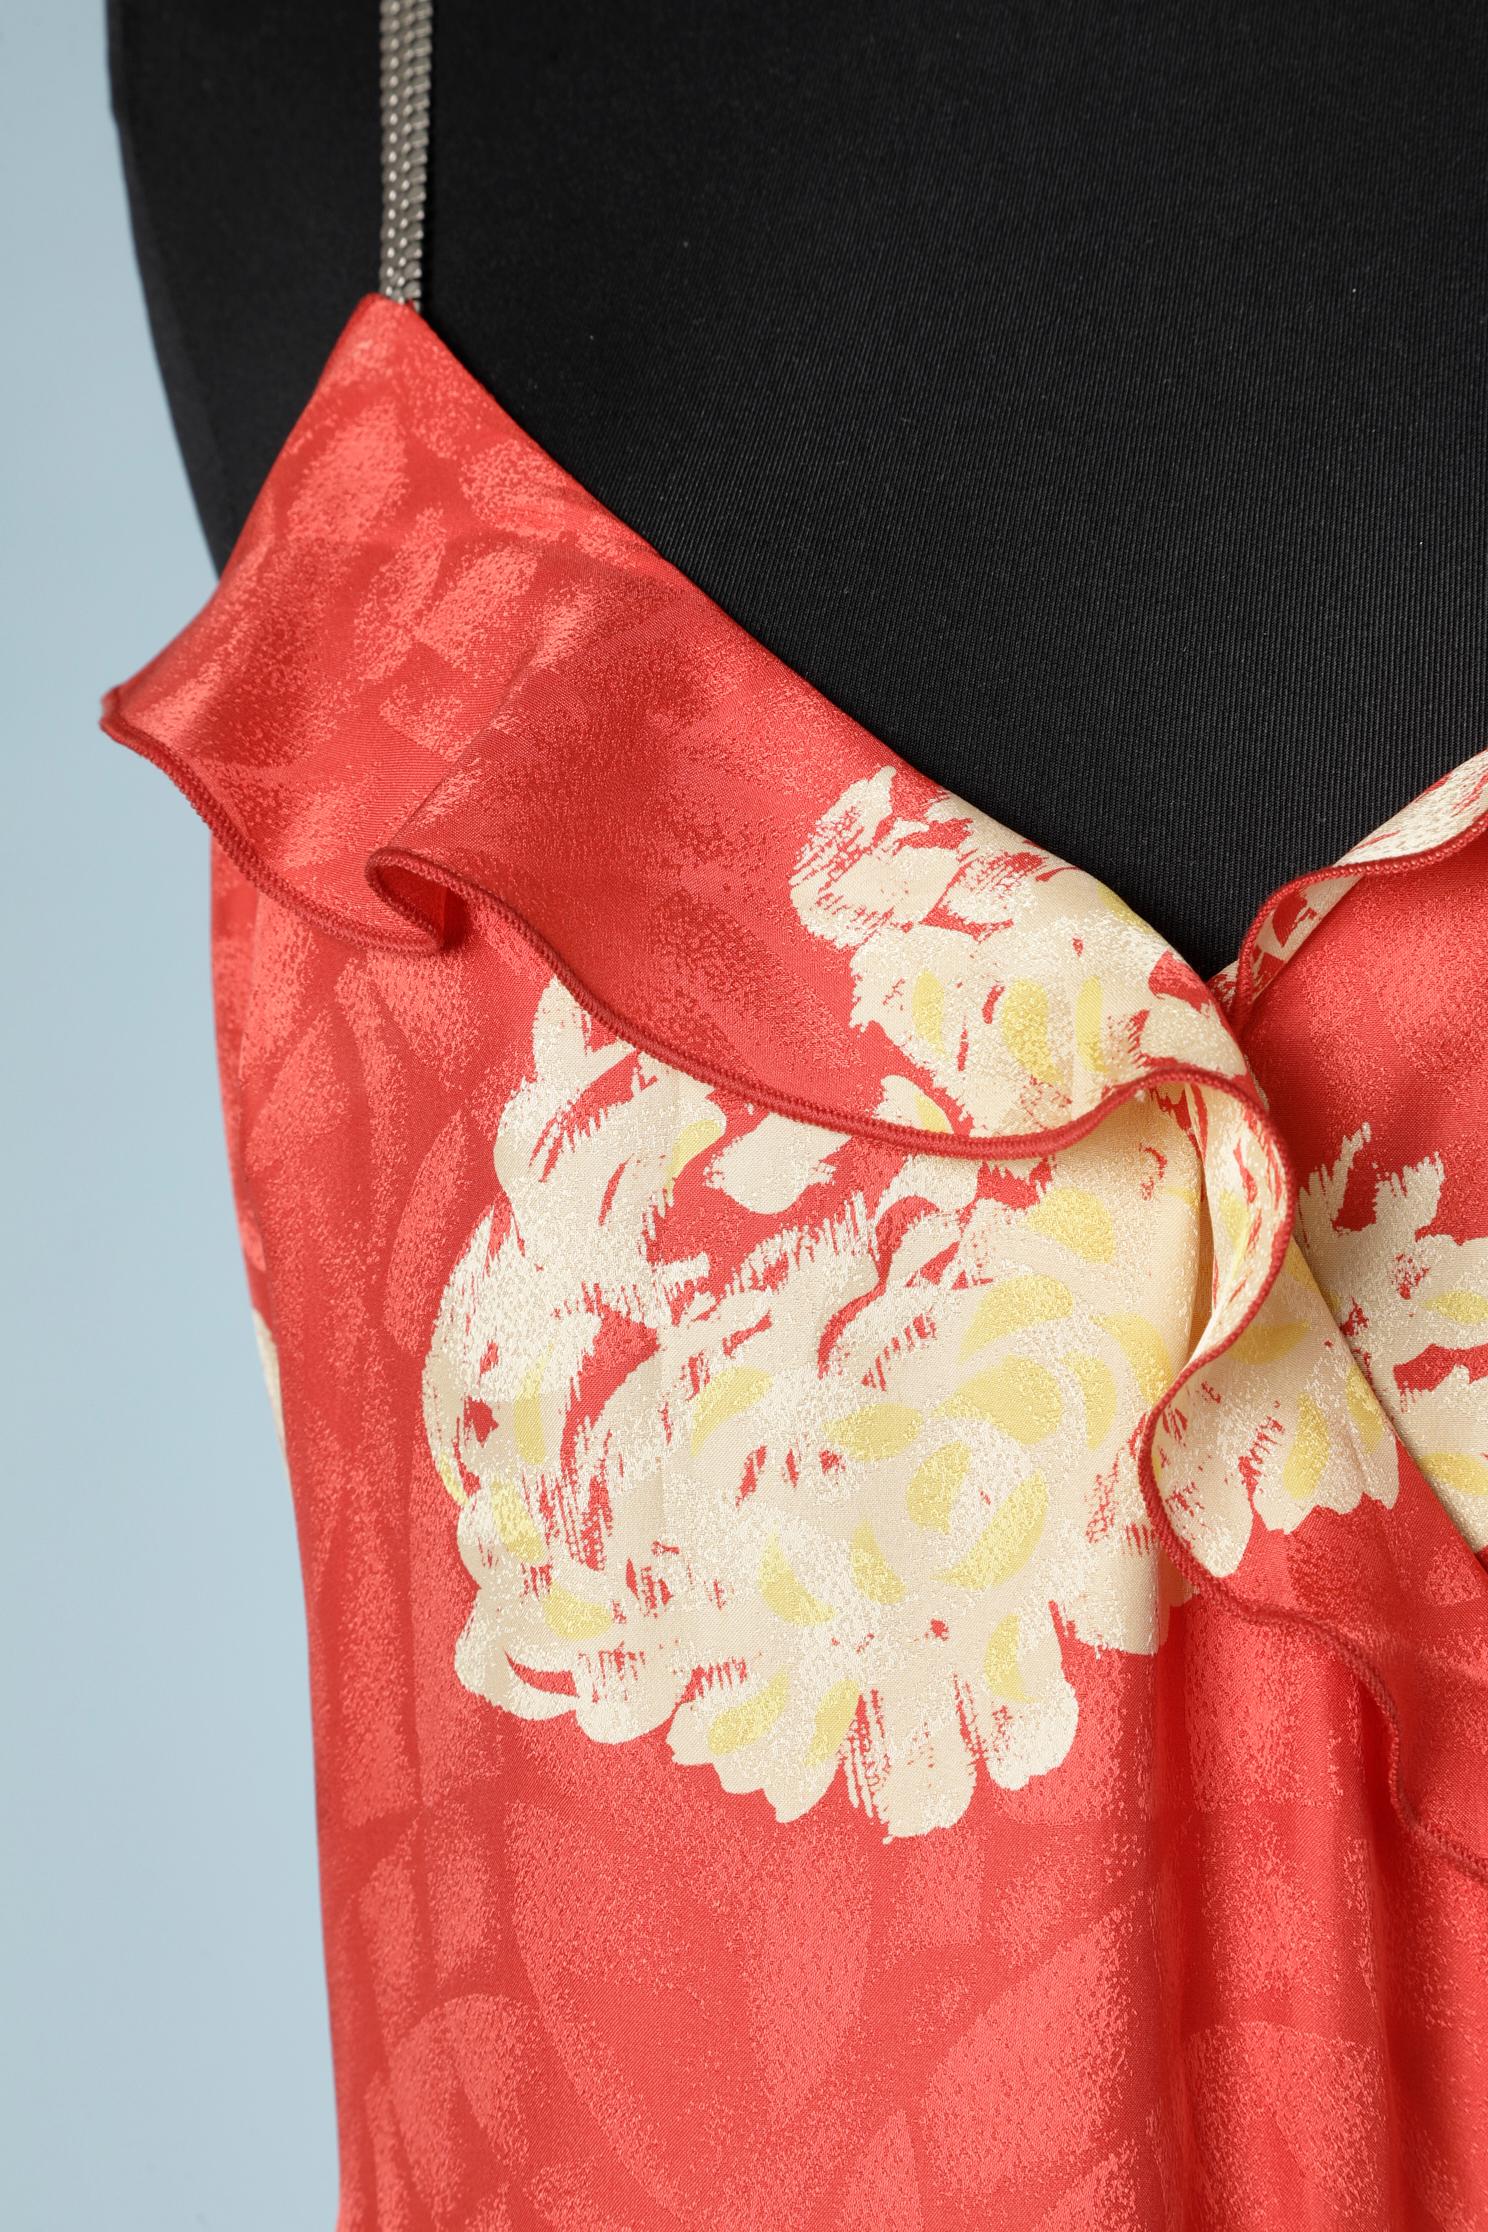 Wrap flower printed dress in silk. Metallic shoulder straps 
Size L 